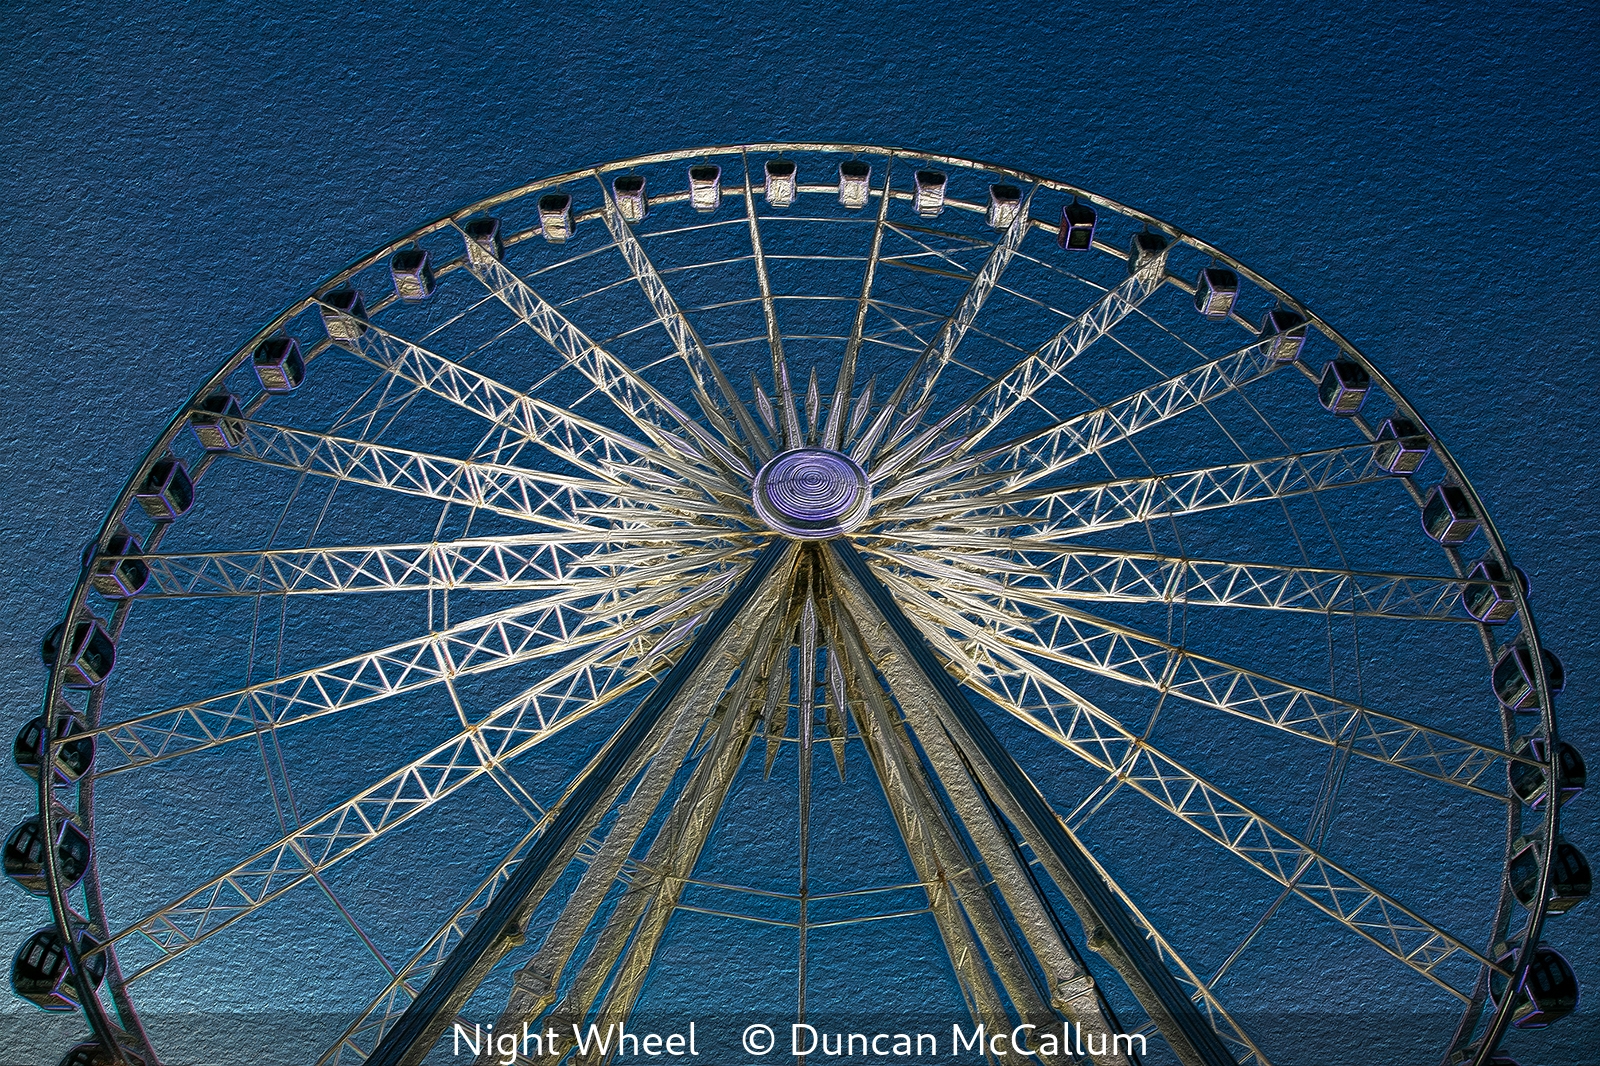 Duncan McCallum_Night Wheel